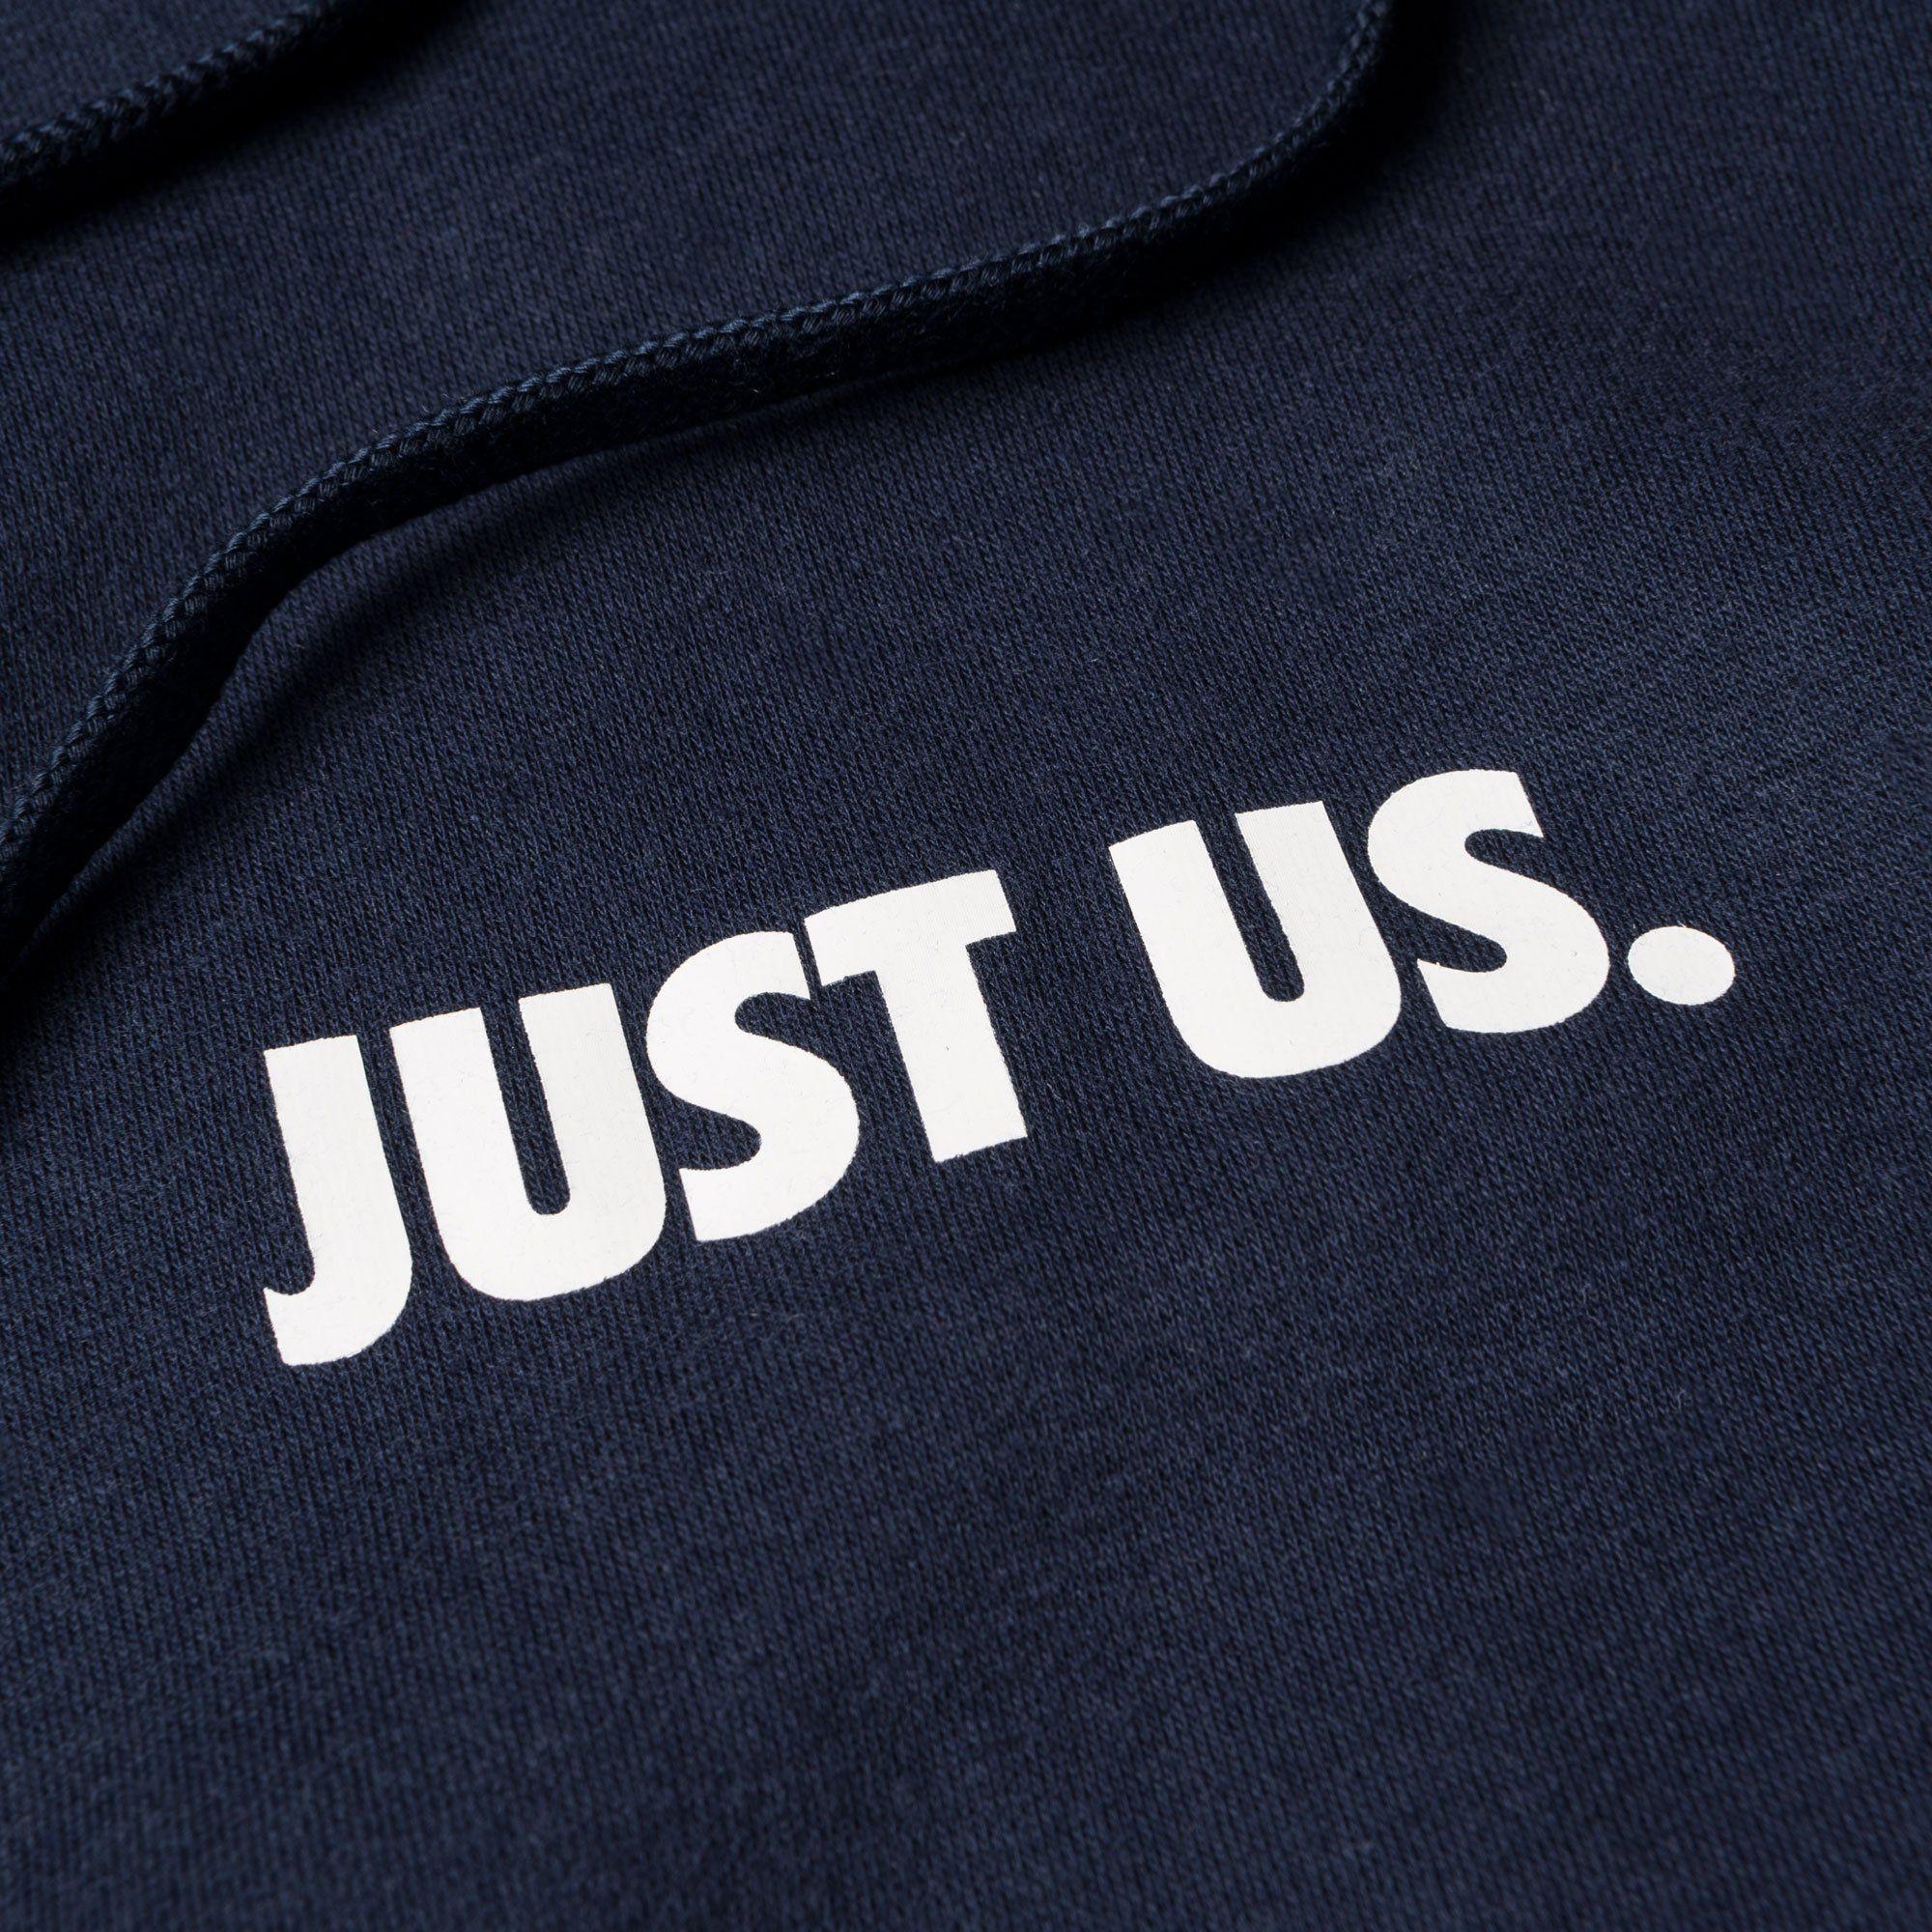 Kith Just Us Logo - Kith x Nike Just Us Hoodie